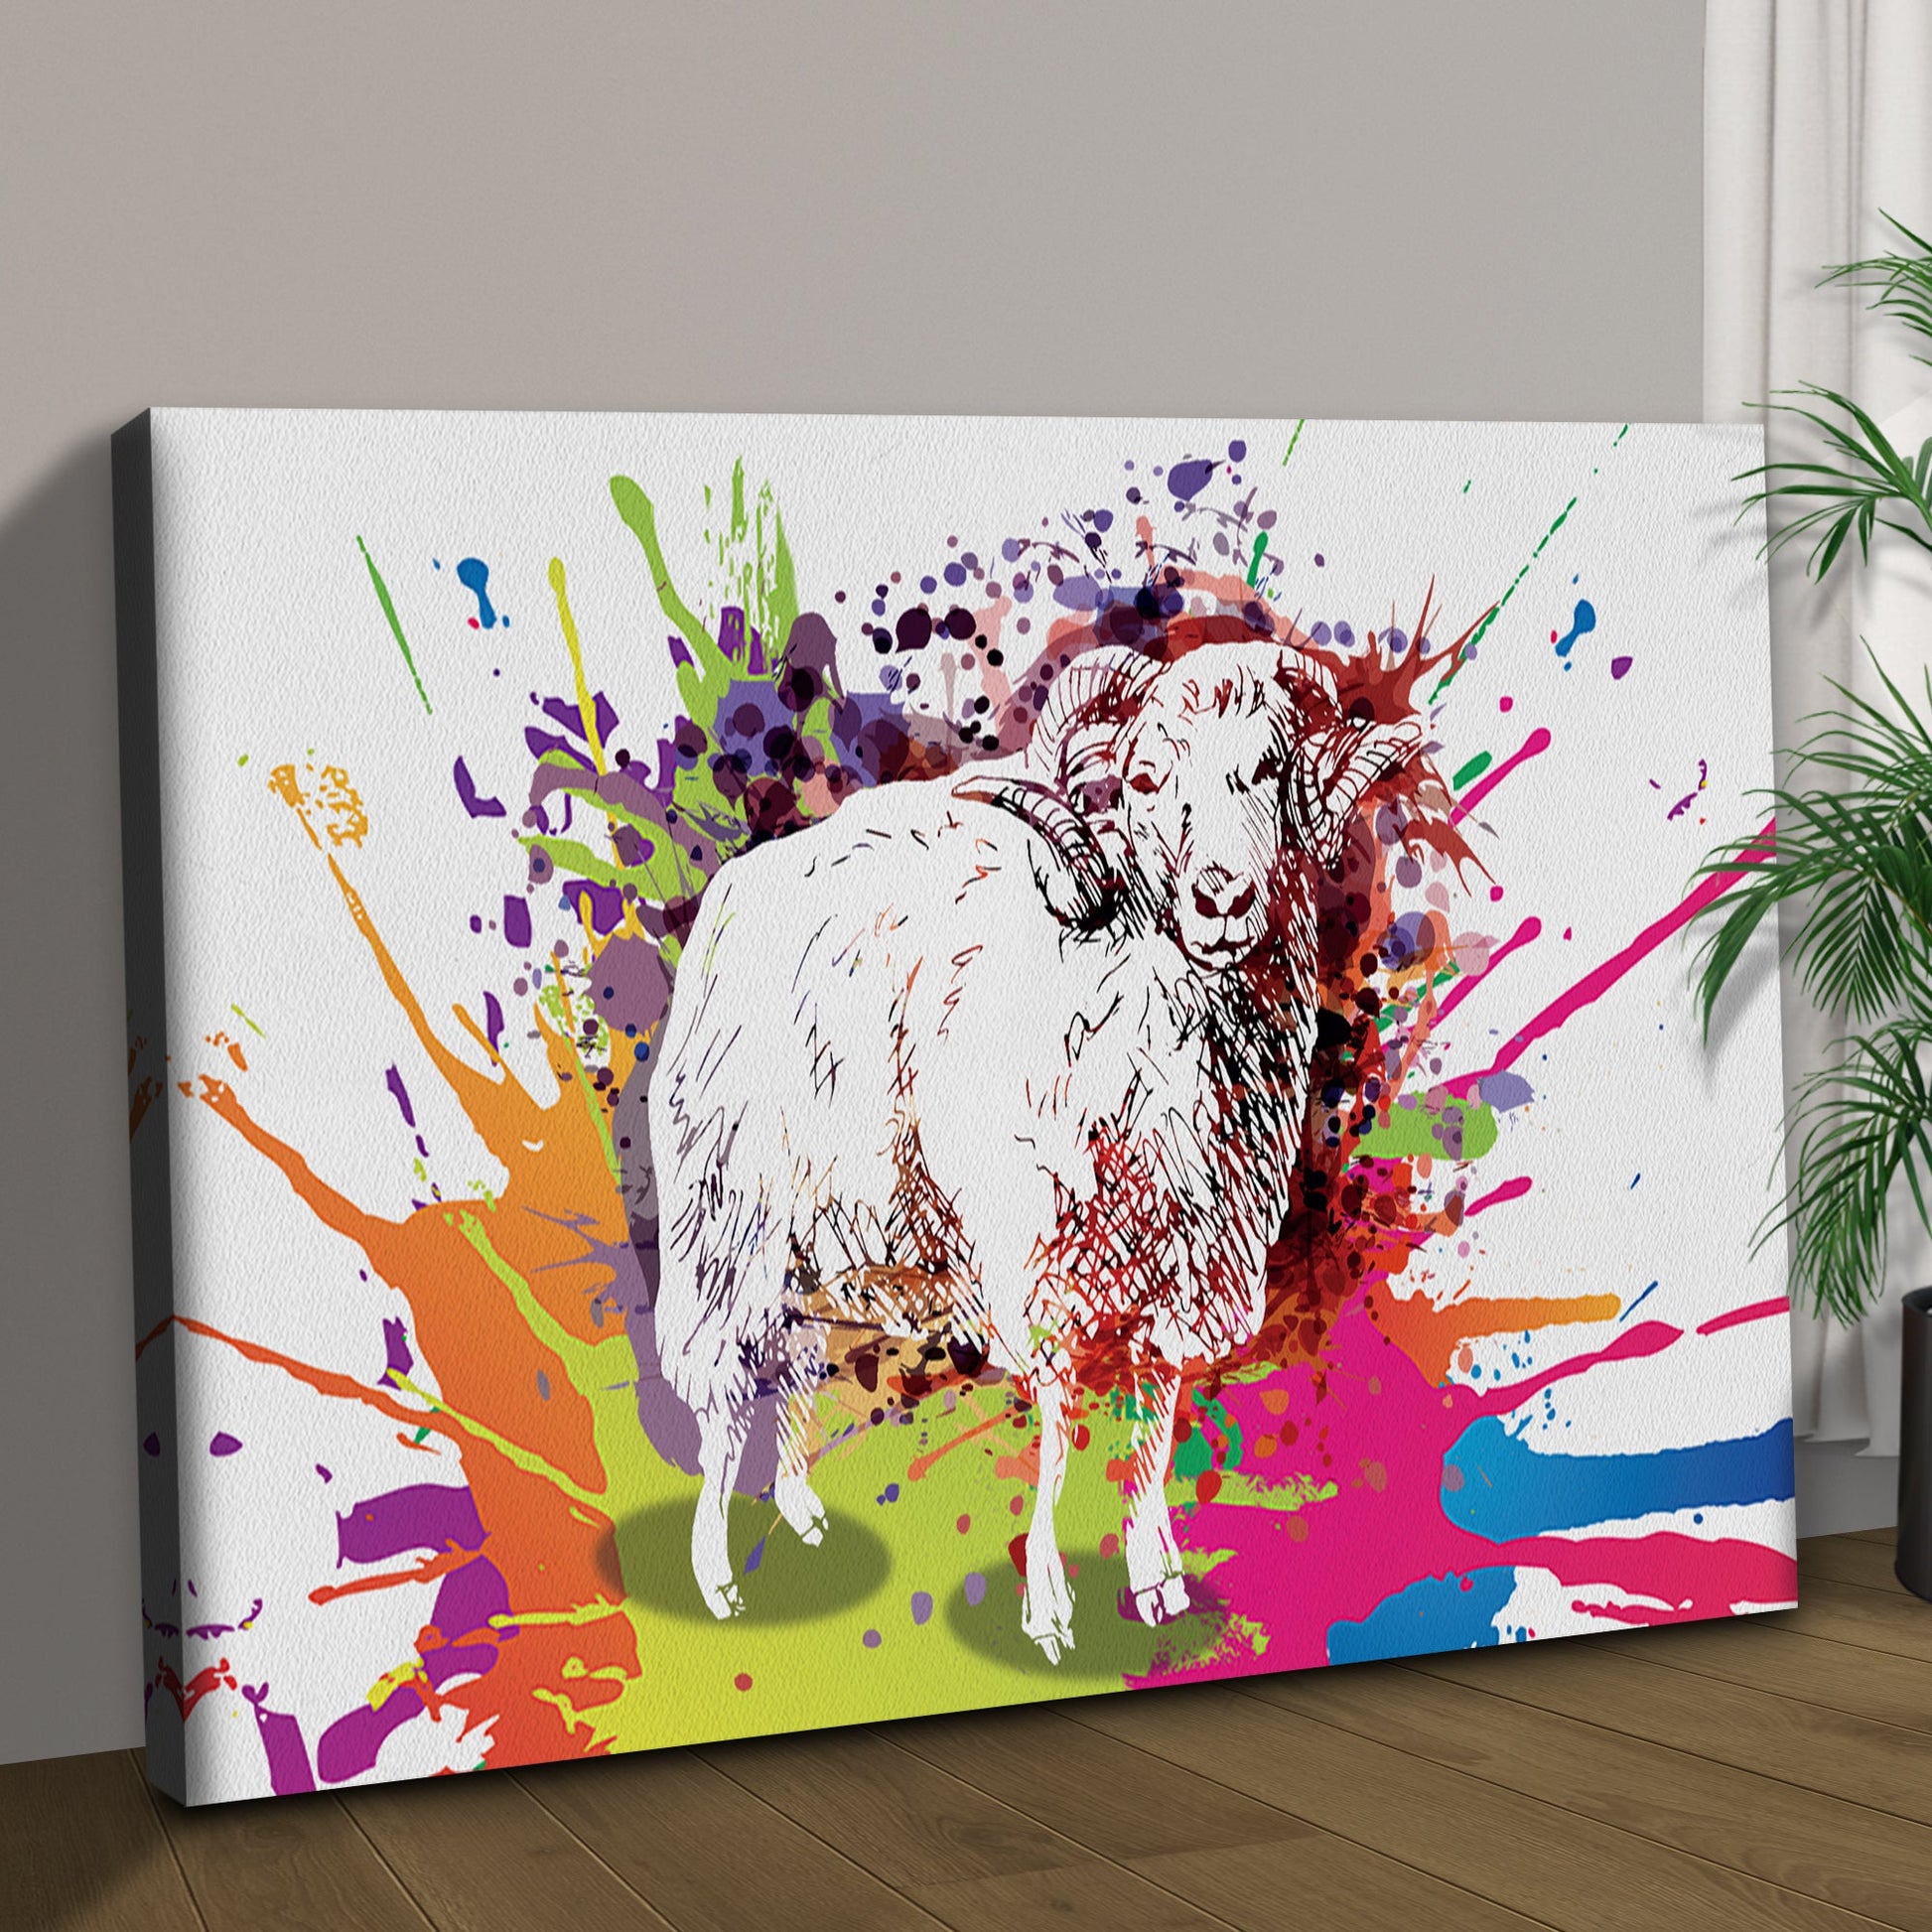 Splash of Wool Colored Sheep In Paint Splash Canvas Wall Art